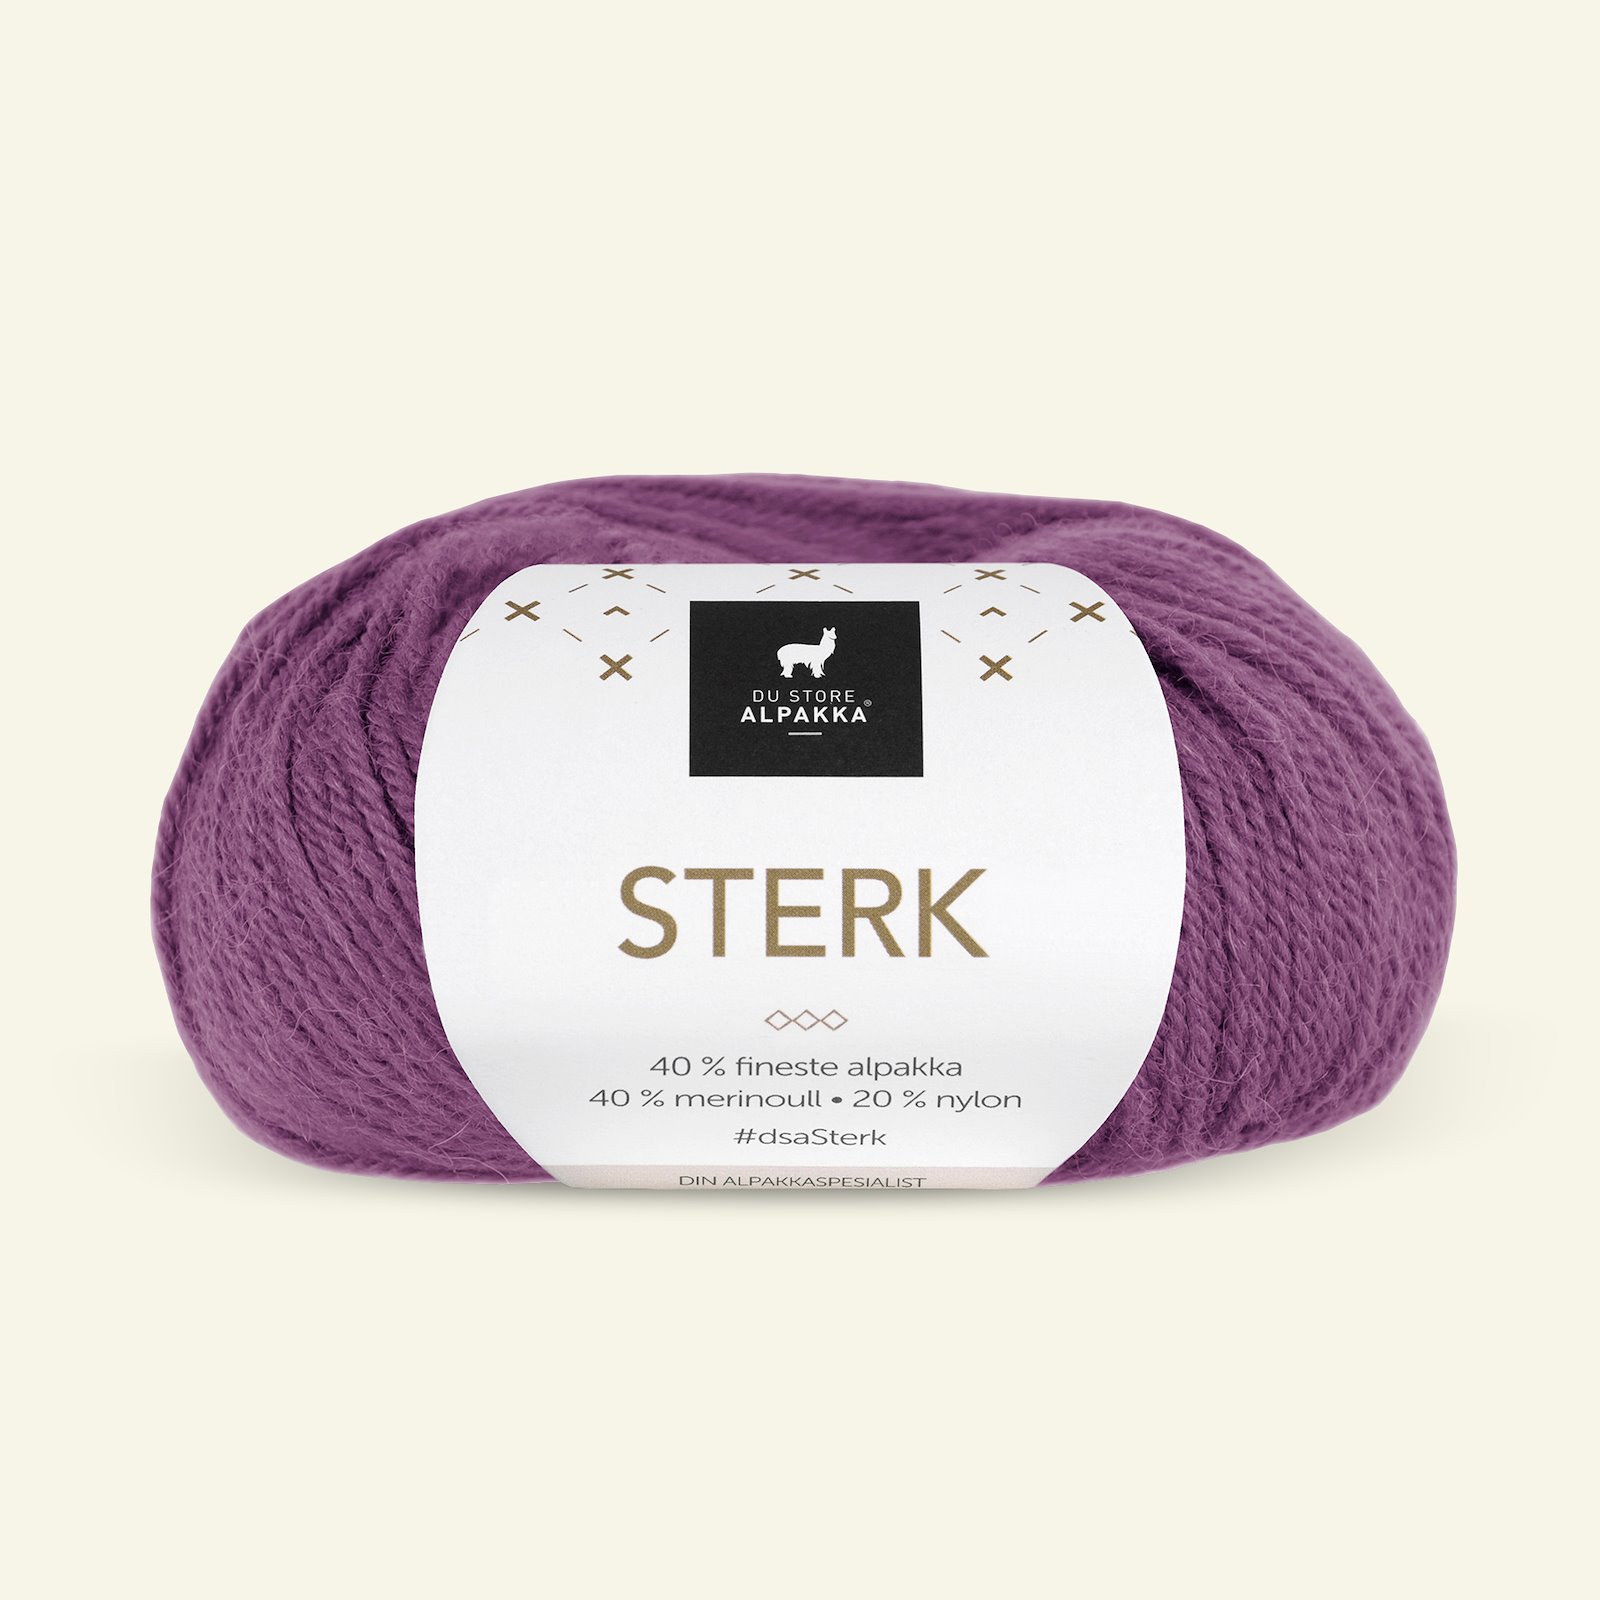 Du Store Alpakka, alpaca merino mixed yarn "Sterk", heather (831) 90000669_pack